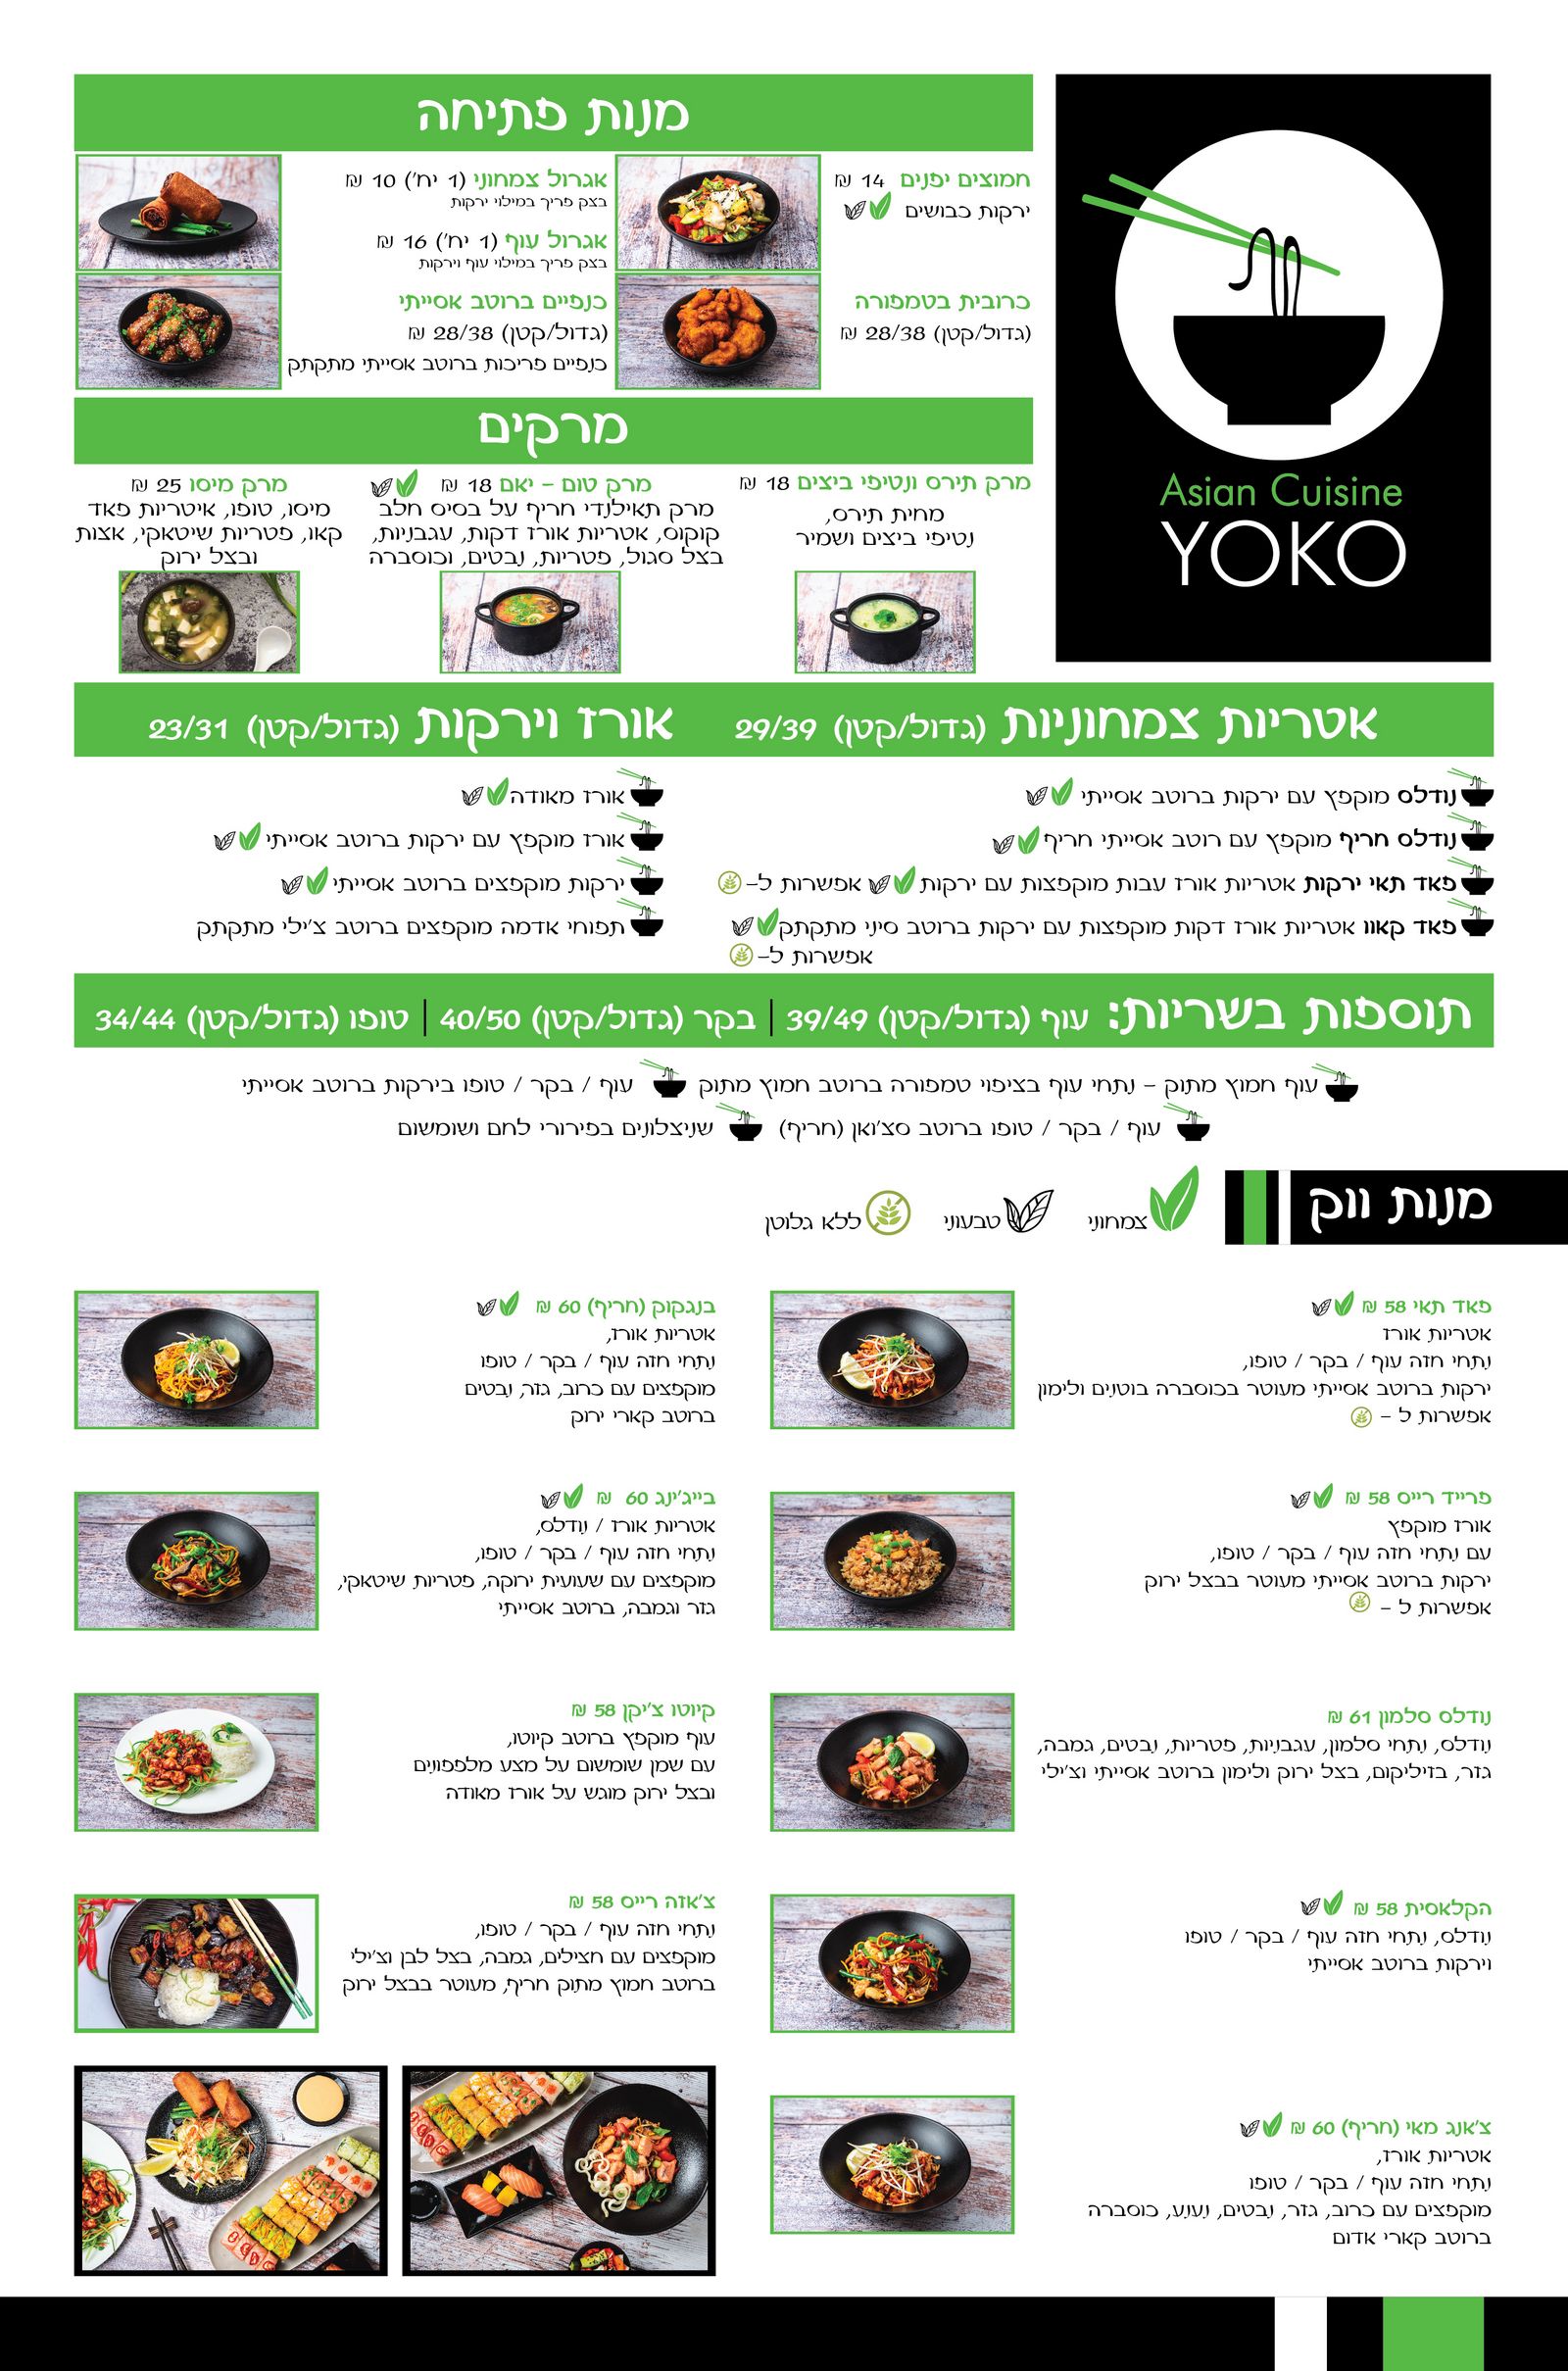 sushi yoko menu 1